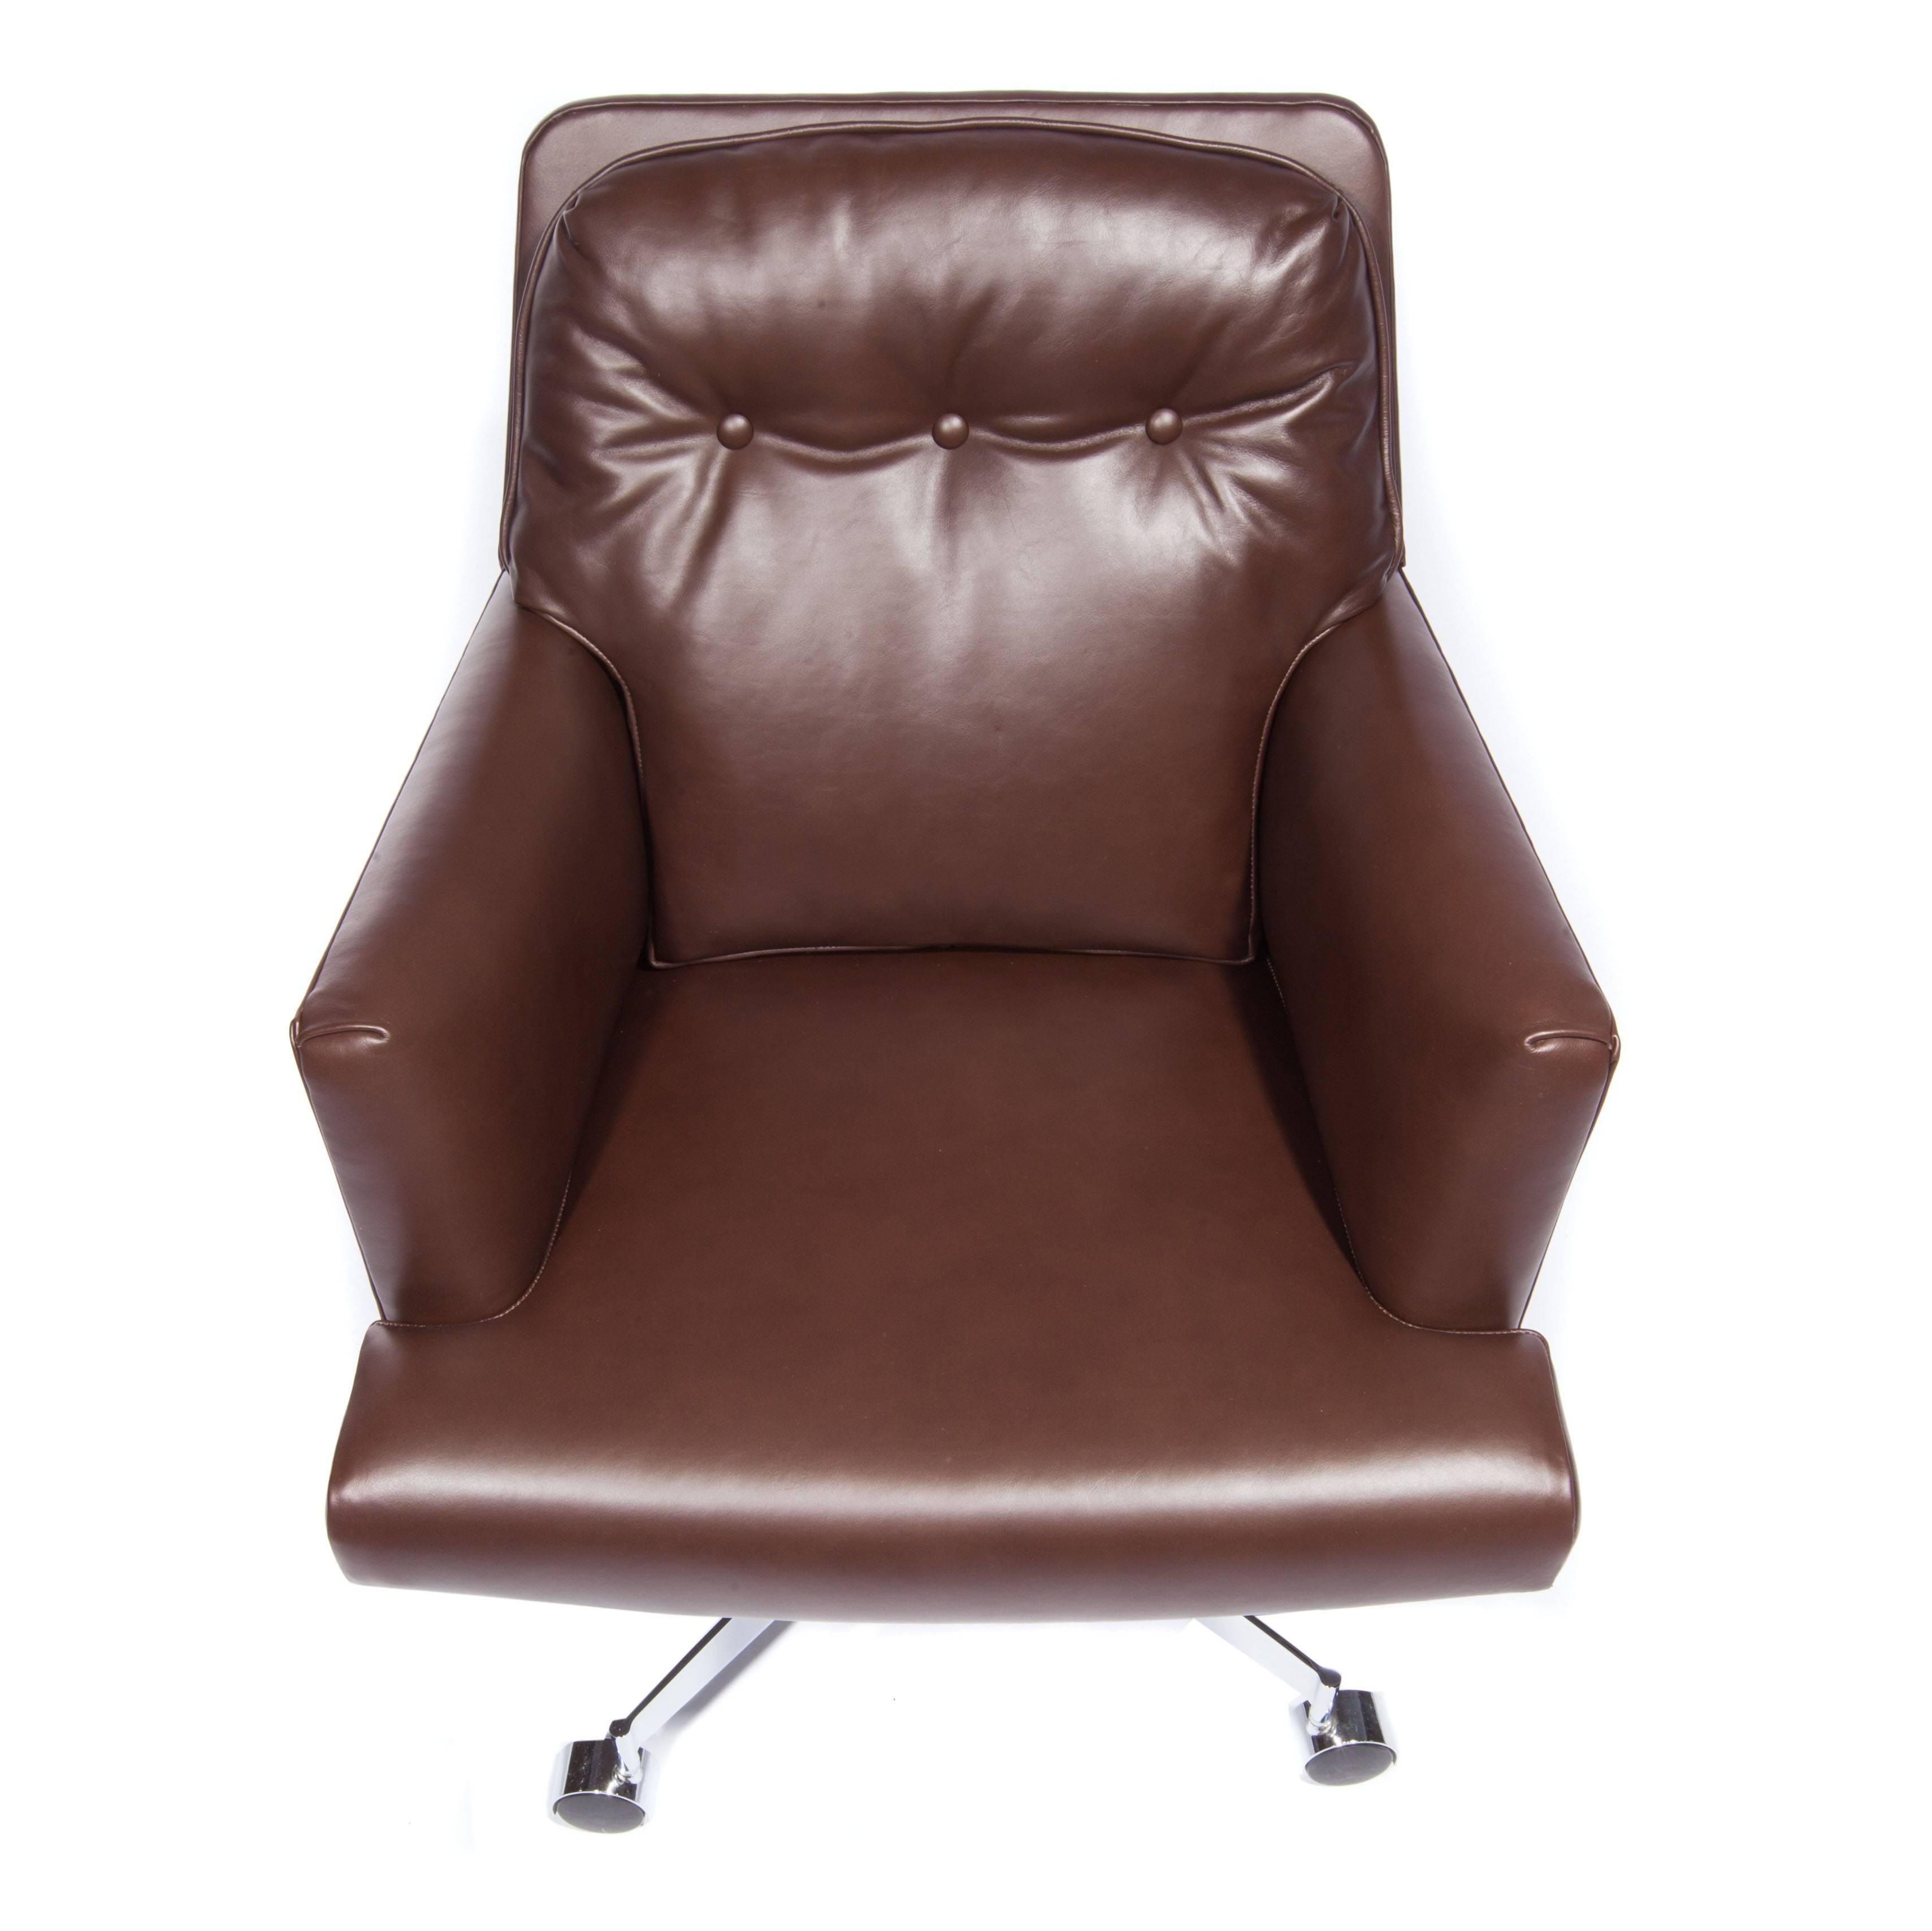 Mid-20th Century Leather and Chrome Executive Swivel Chair by Dunbar, circa 1960s